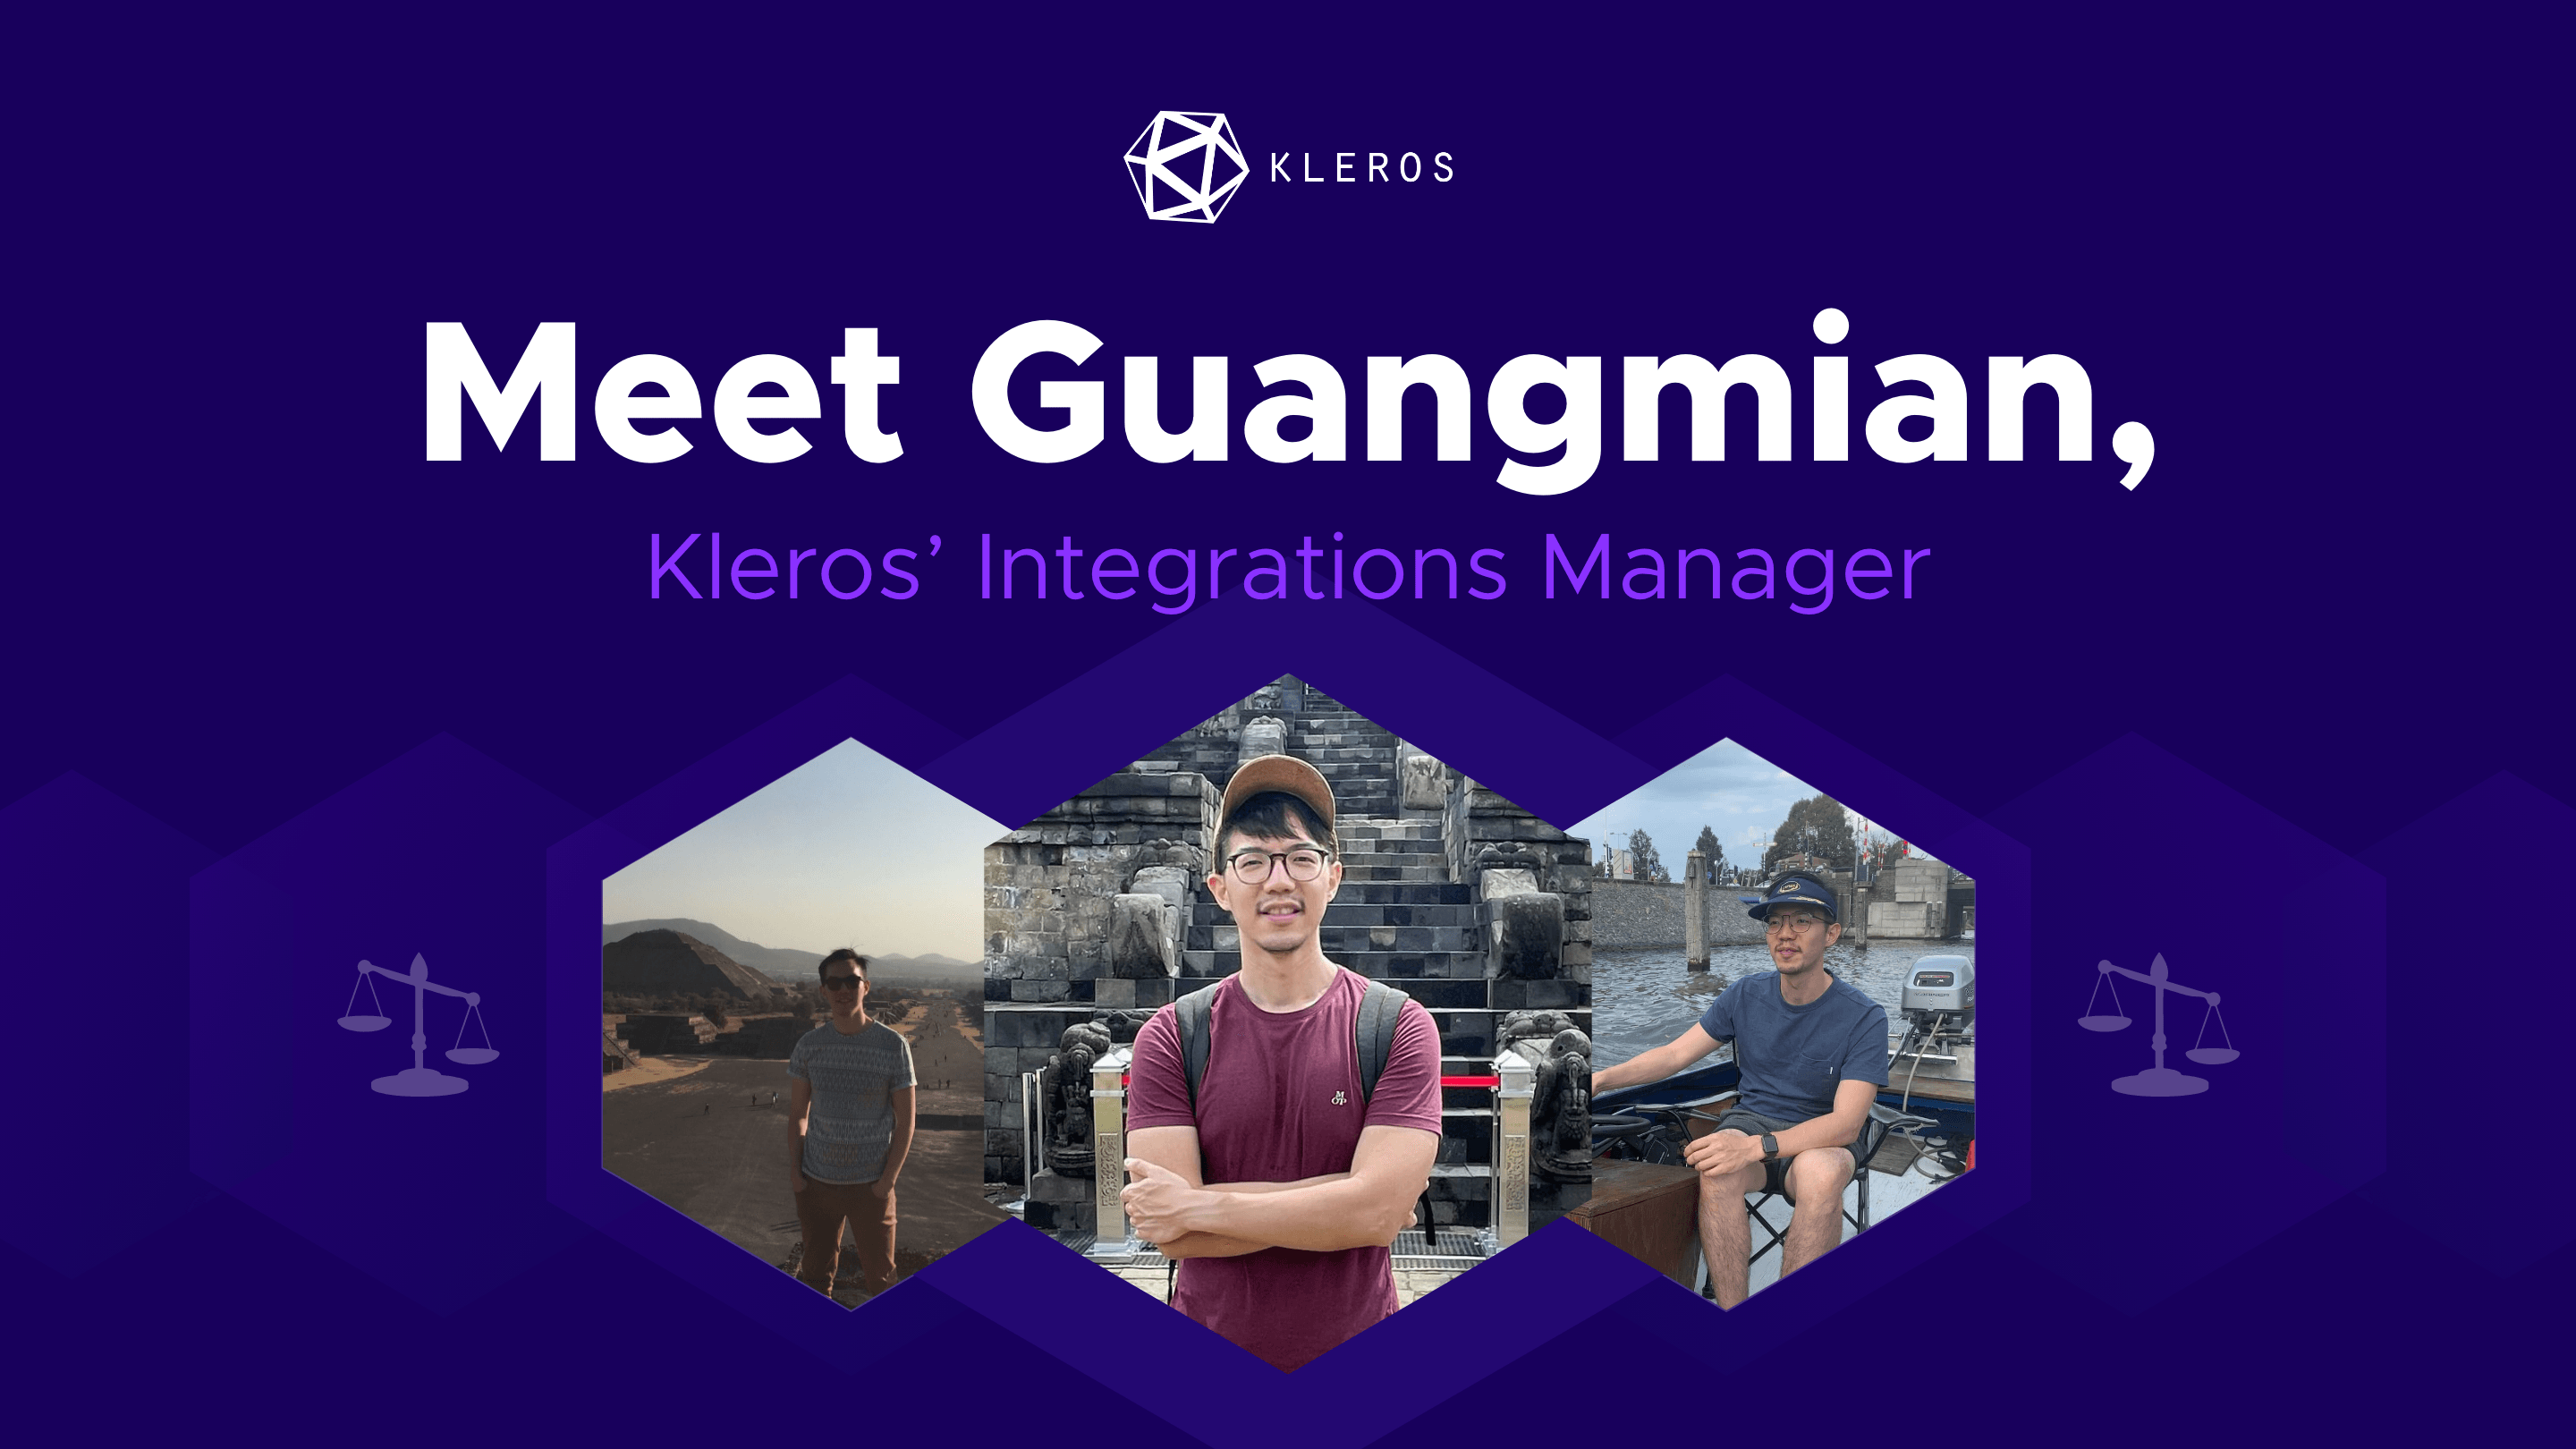 Introducing Guangmian, Kleros' Integrations Manager